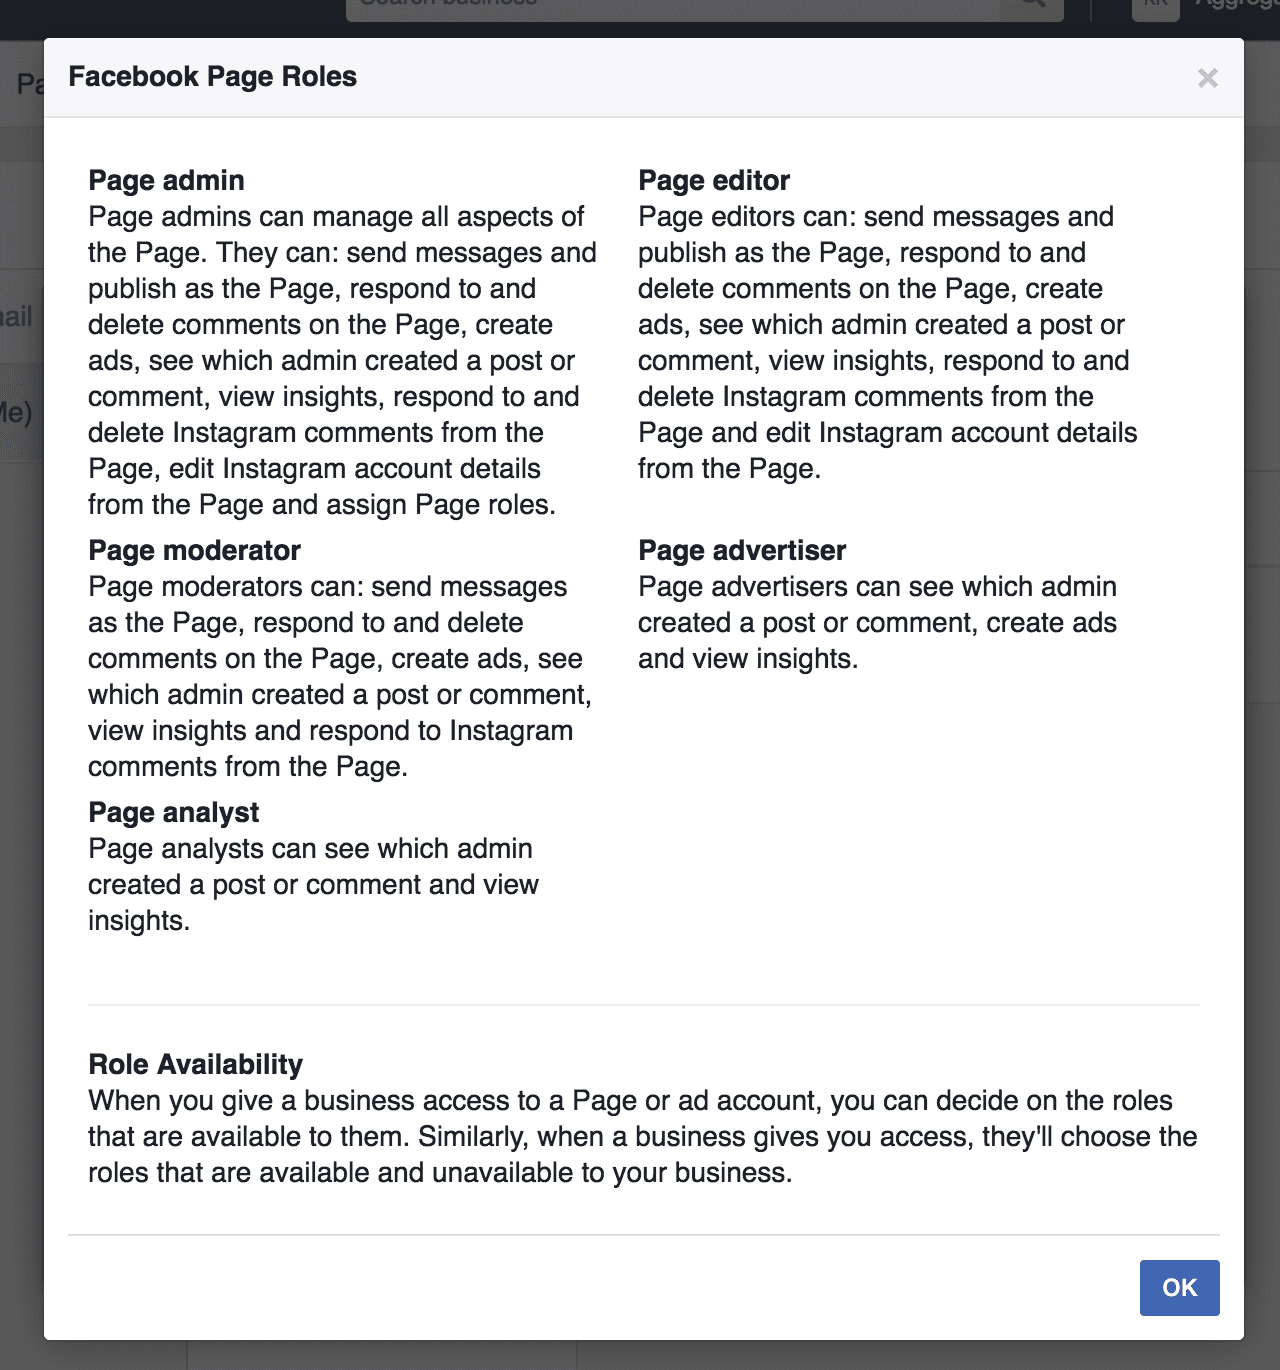 Facebook Page roles